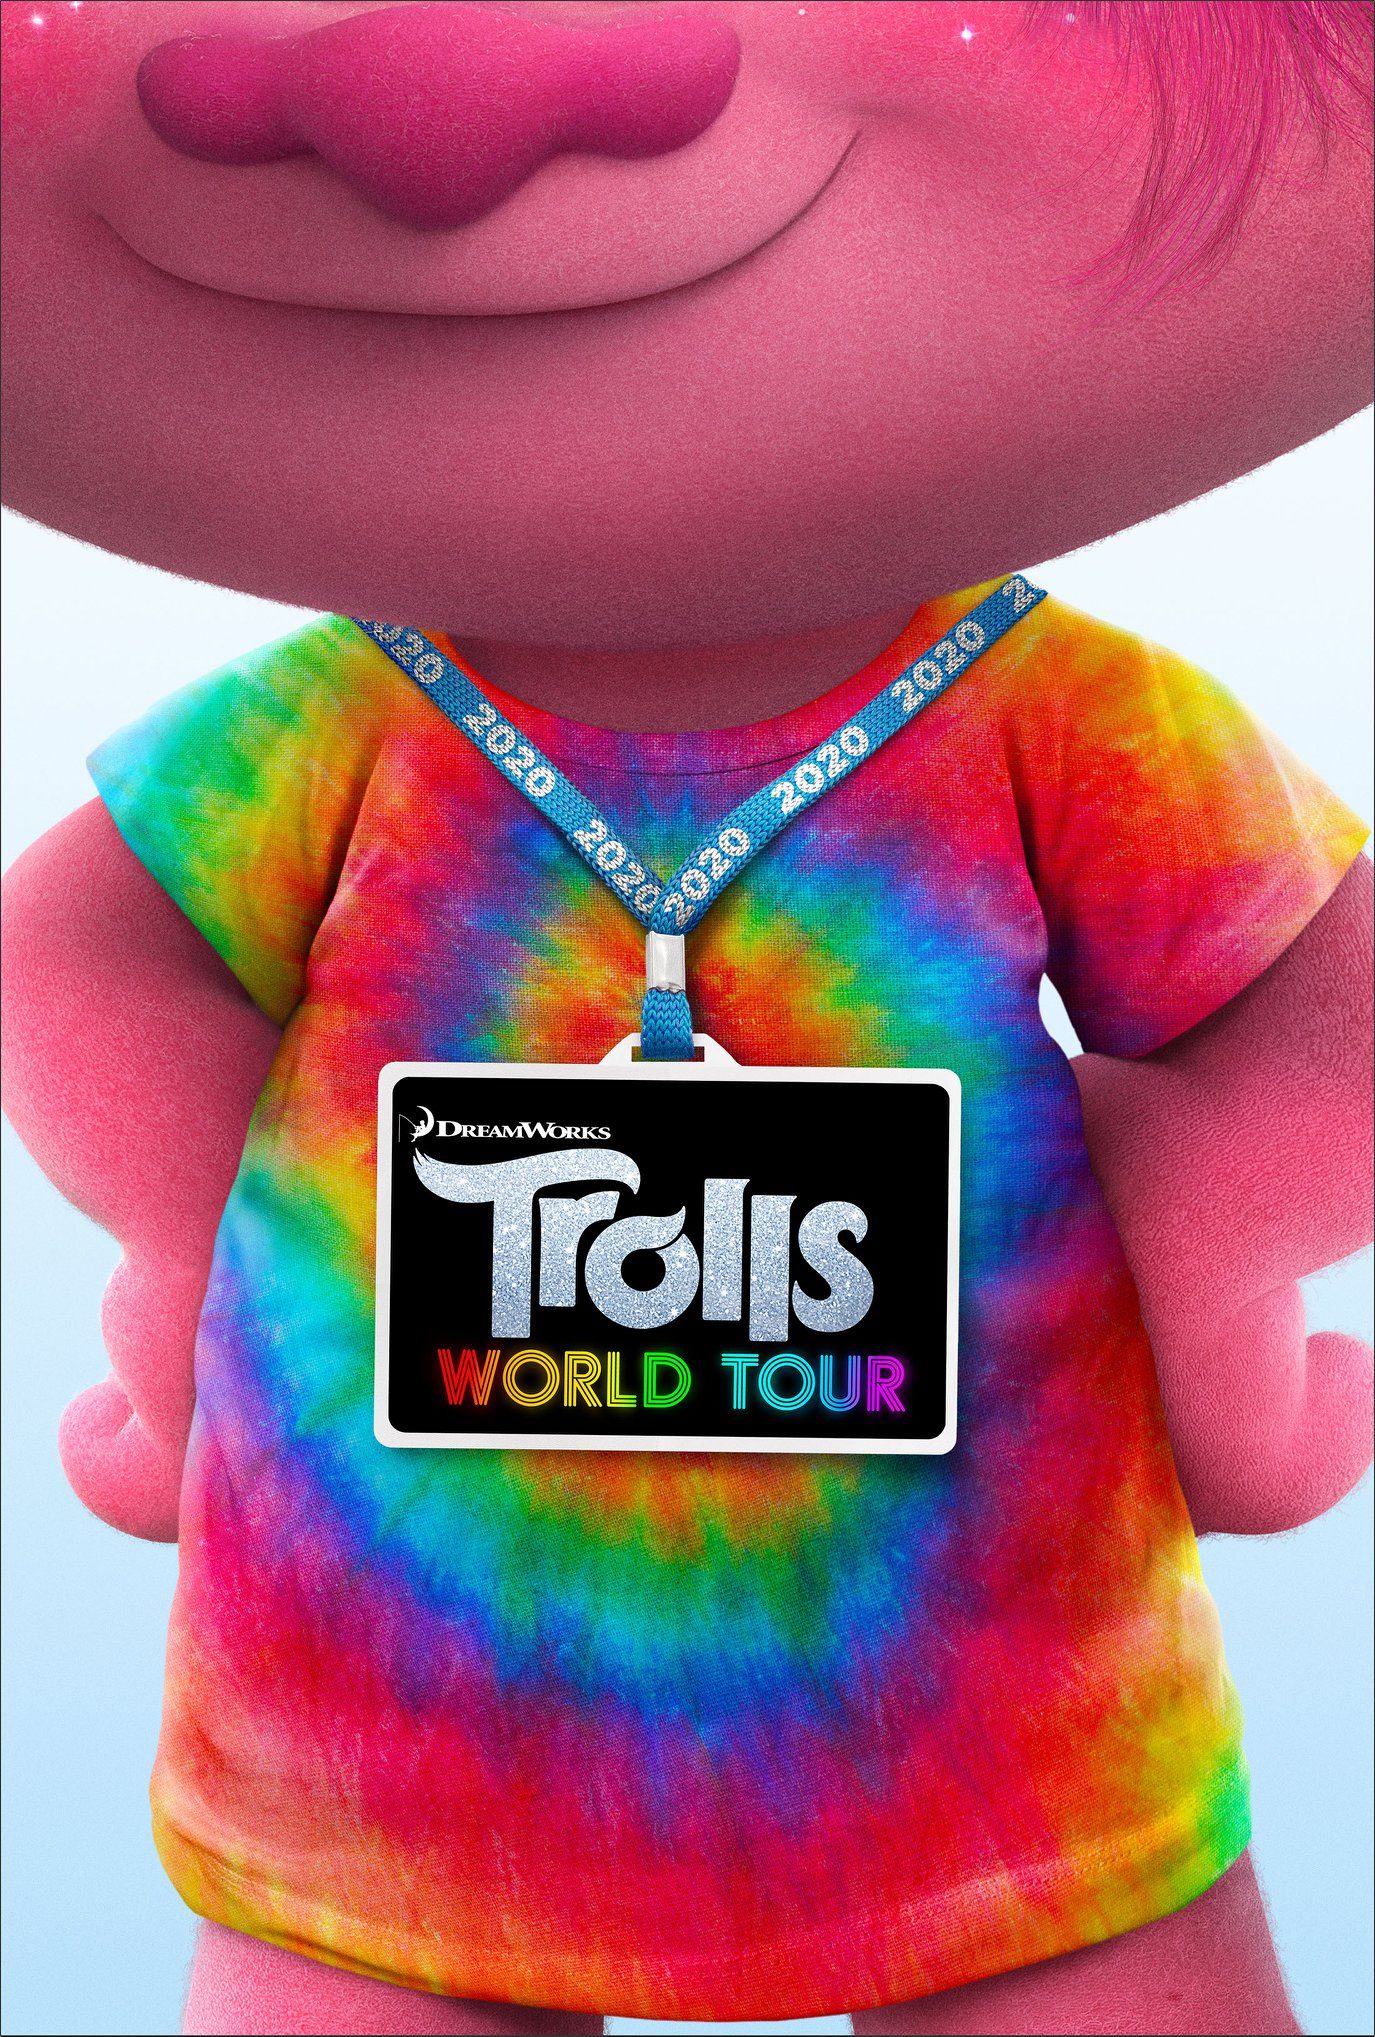 38+ Trolls World Tour Swedish Cast ‘trolls 2’: watch the official trailer for ‘trolls world tour’